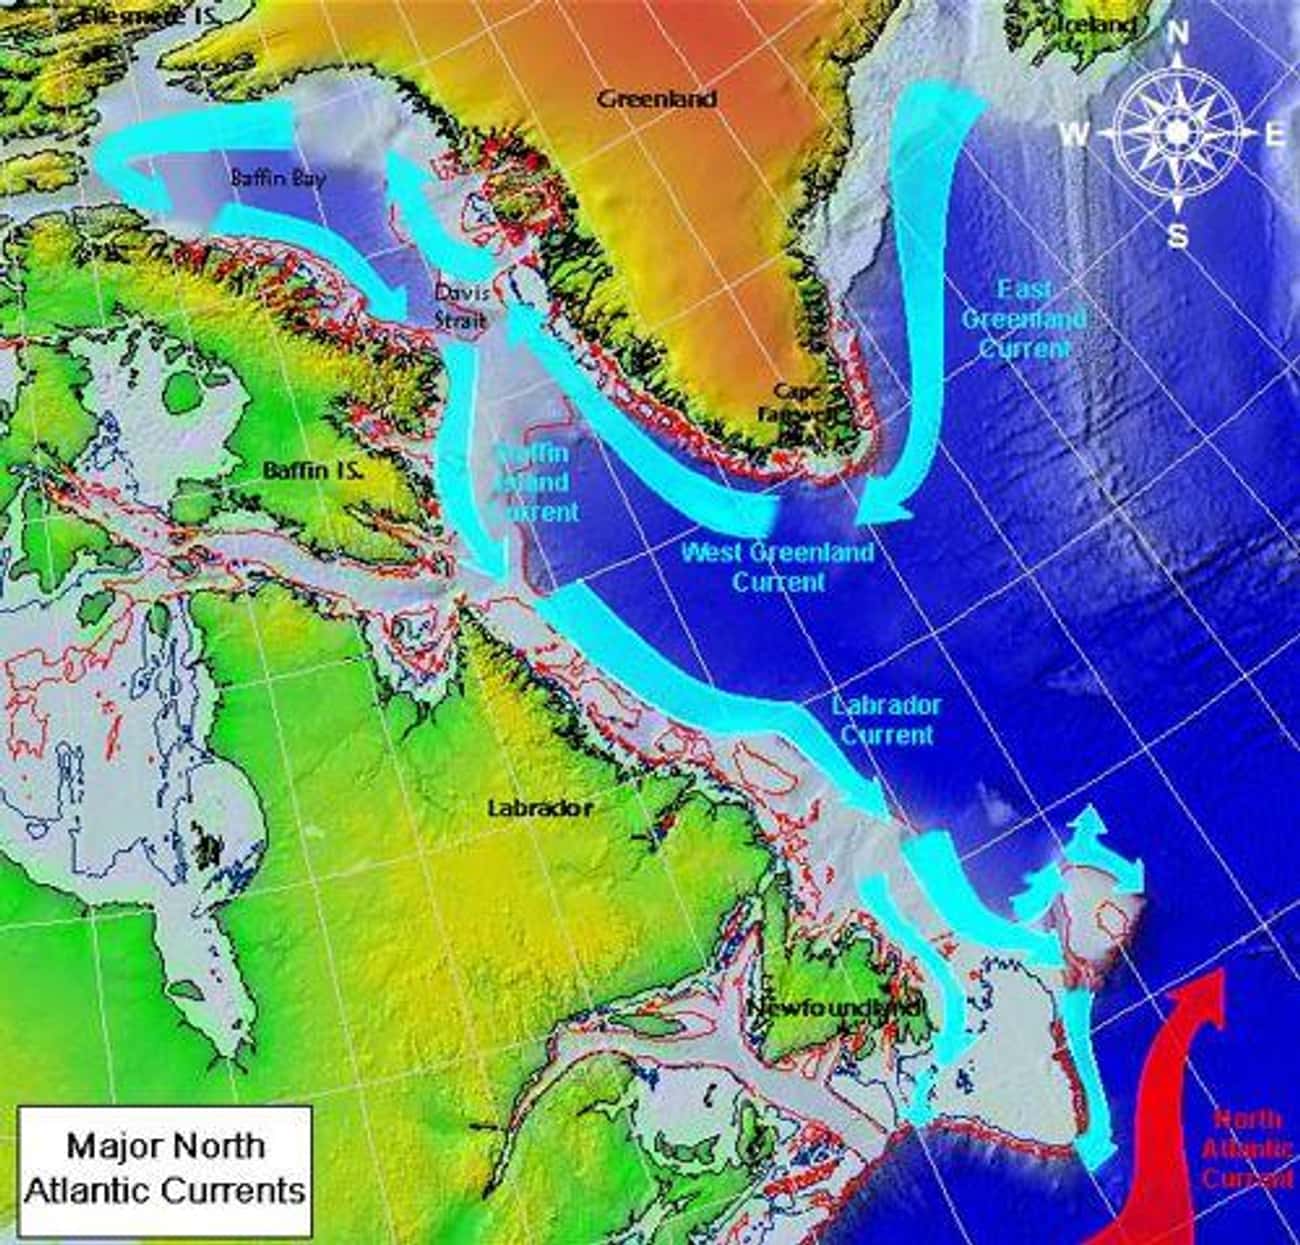 Холодное течение северо ледовитого океана. Лабрадорское течение течения Атлантического океана. Восточно-Гренландское течение течения Атлантического океана. Восточно Гренландское течение на карте Северного Ледовитого океана. Восточно Гренландское течение на карте.